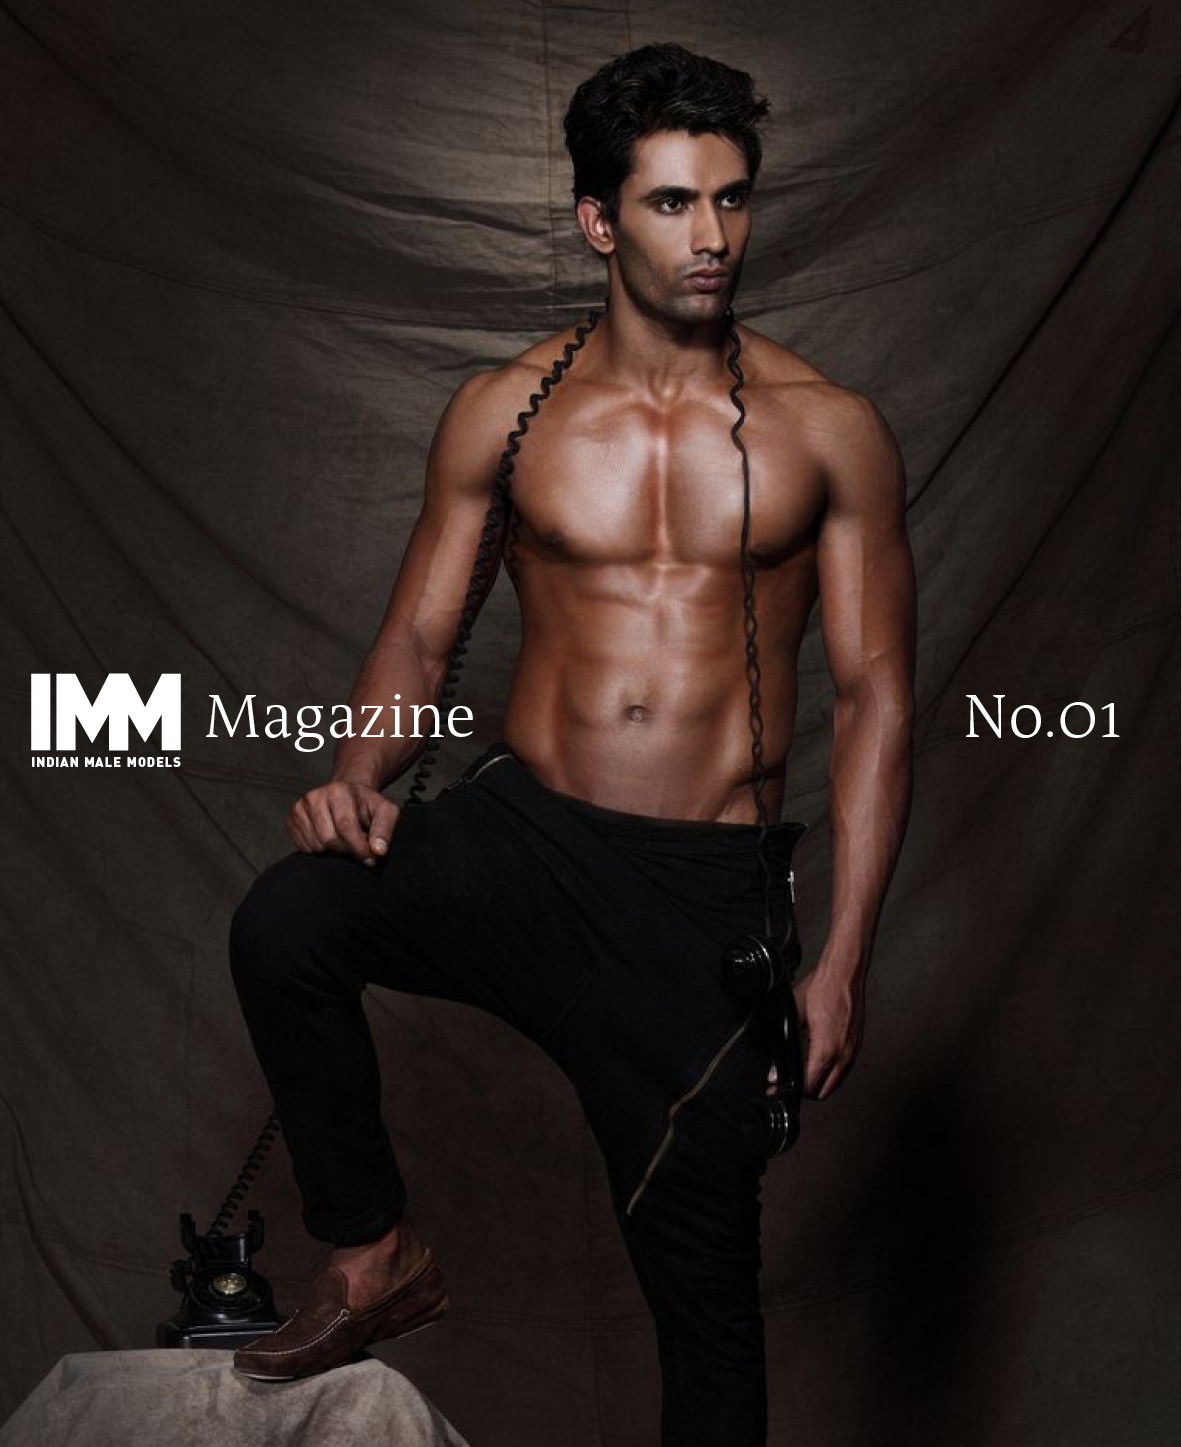 IMM - Indian Male Models Magazine. 